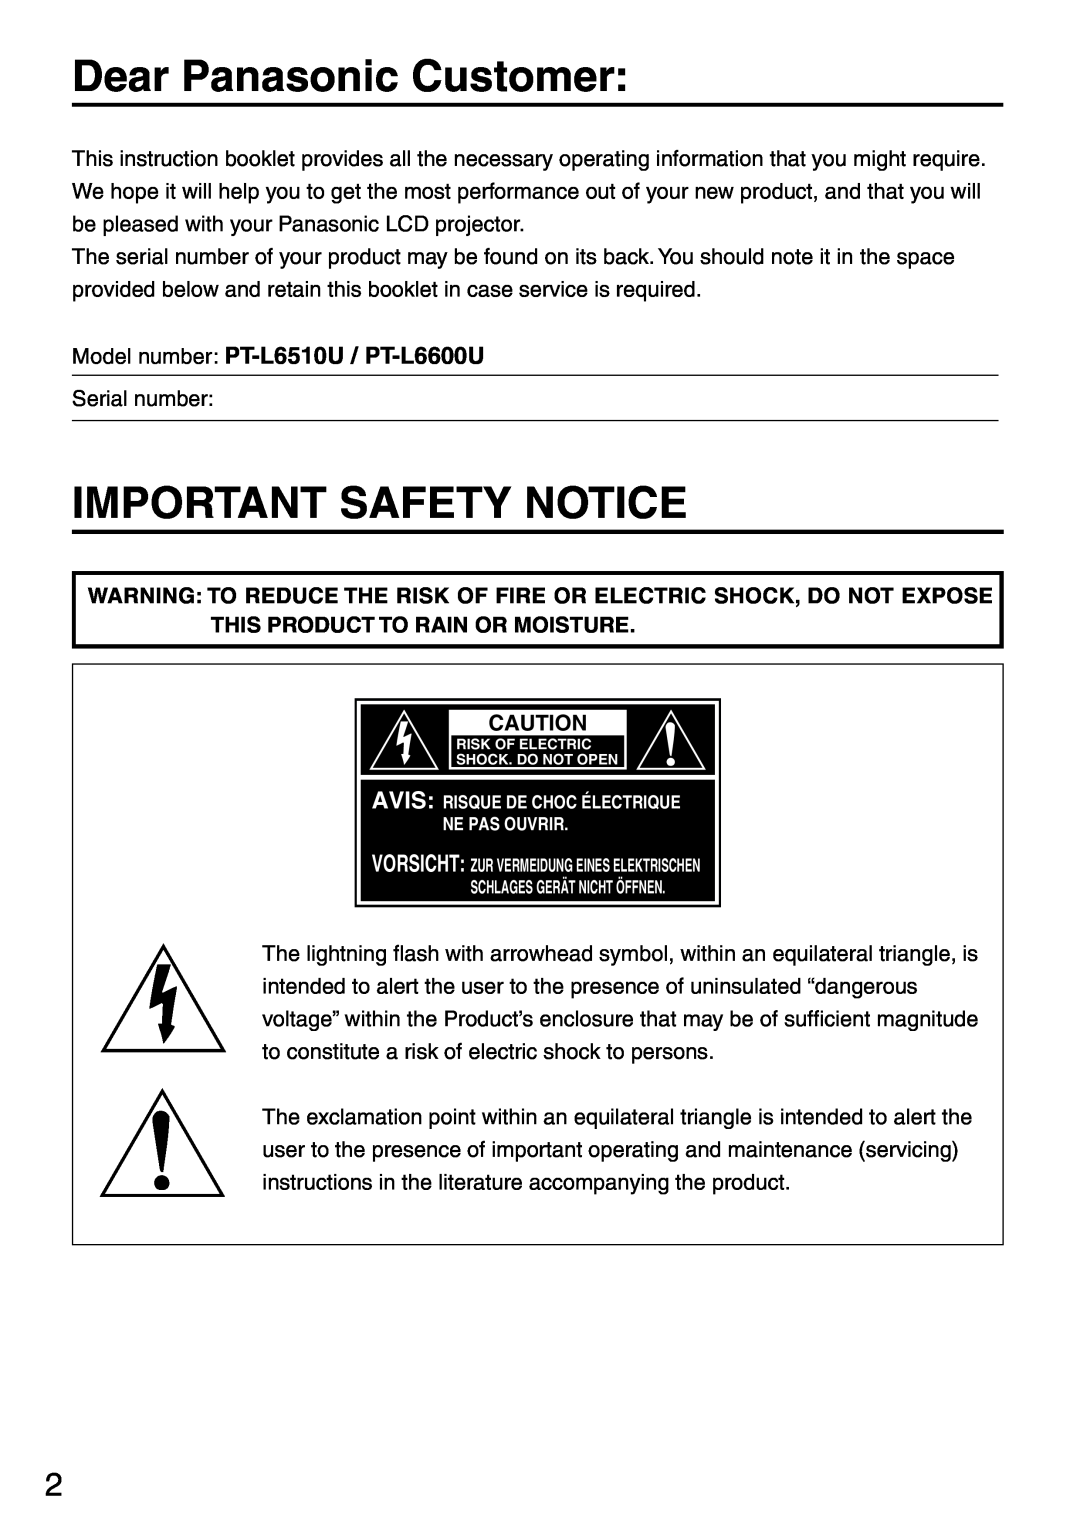 Panasonic manual Dear Panasonic Customer, Important Safety Notice, Model number PT-L6510U / PT-L6600U 